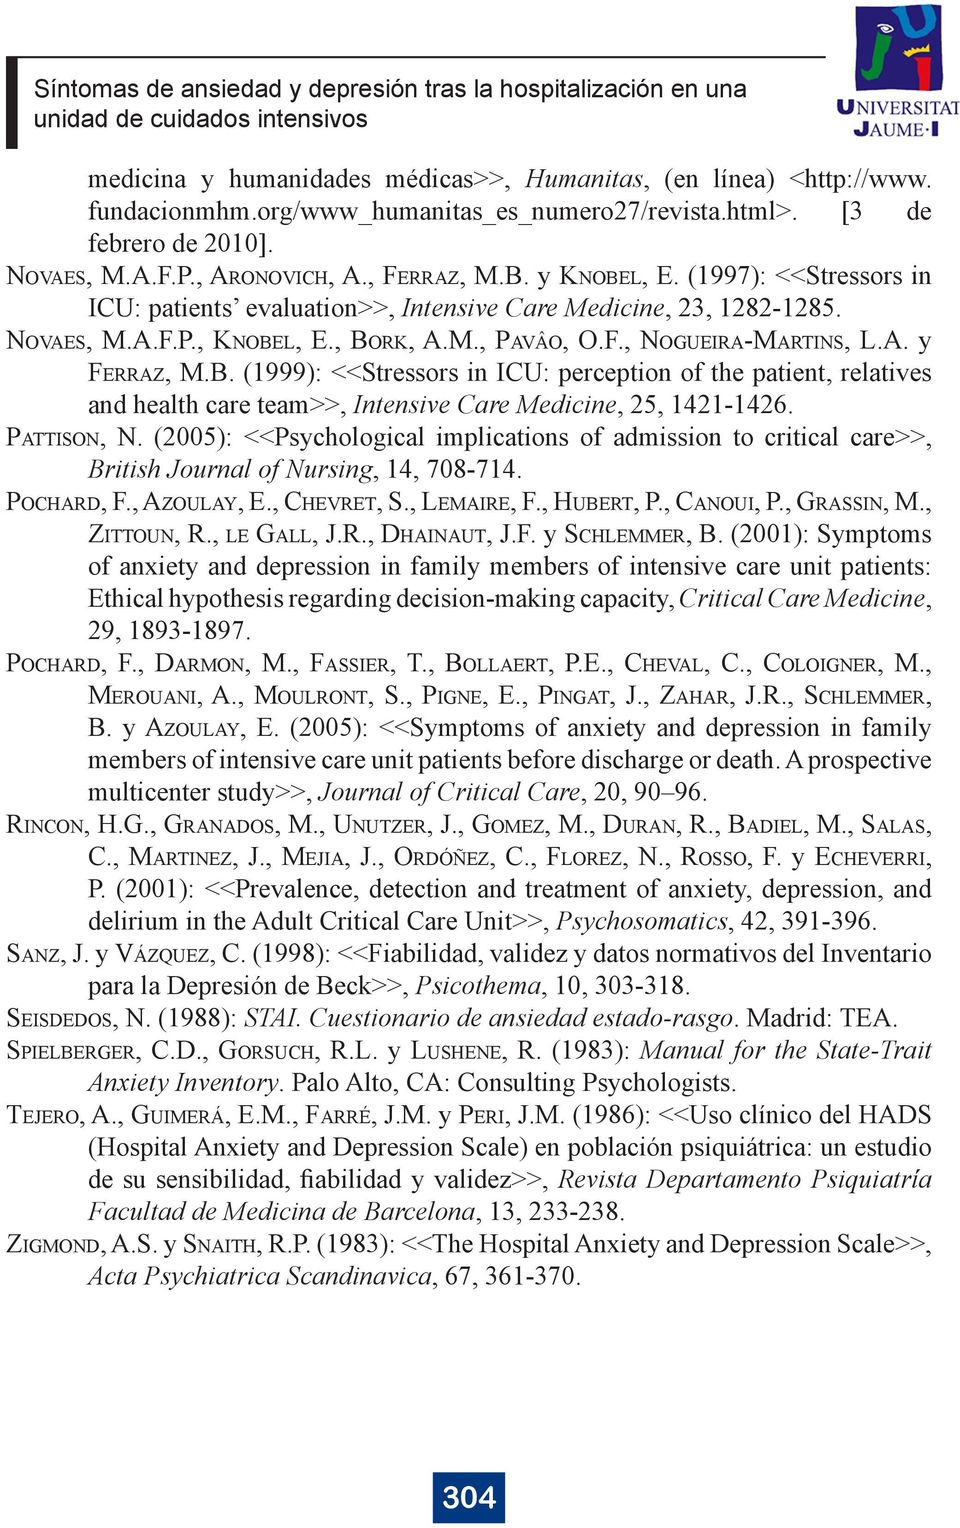 rk, A.M., Pavâo, O.F., Nogueira-Martins, L.A. y Ferraz, M.B. (1999): <<Stressors in ICU: perception of the patient, relatives and health care team>>, Intensive Care Medicine, 25, 1421-1426.